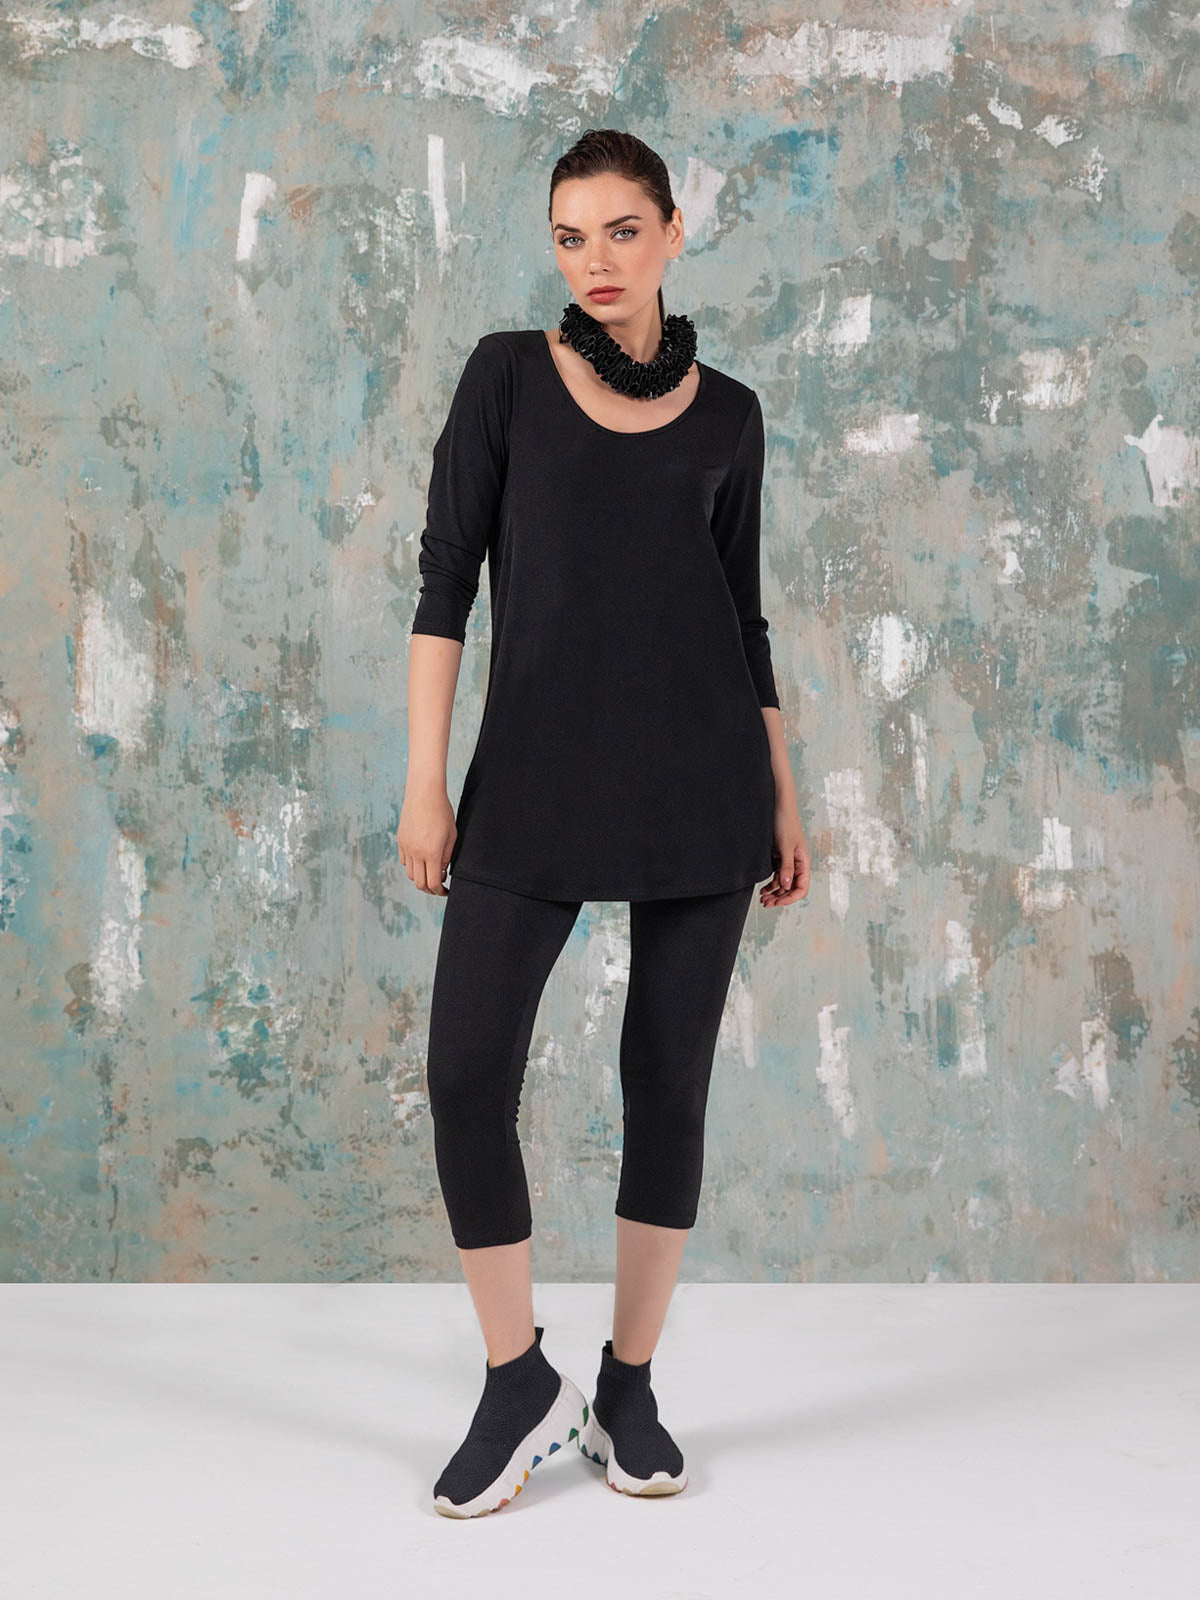 Kozan Donna Legging, Black Vogue - Statement Boutique